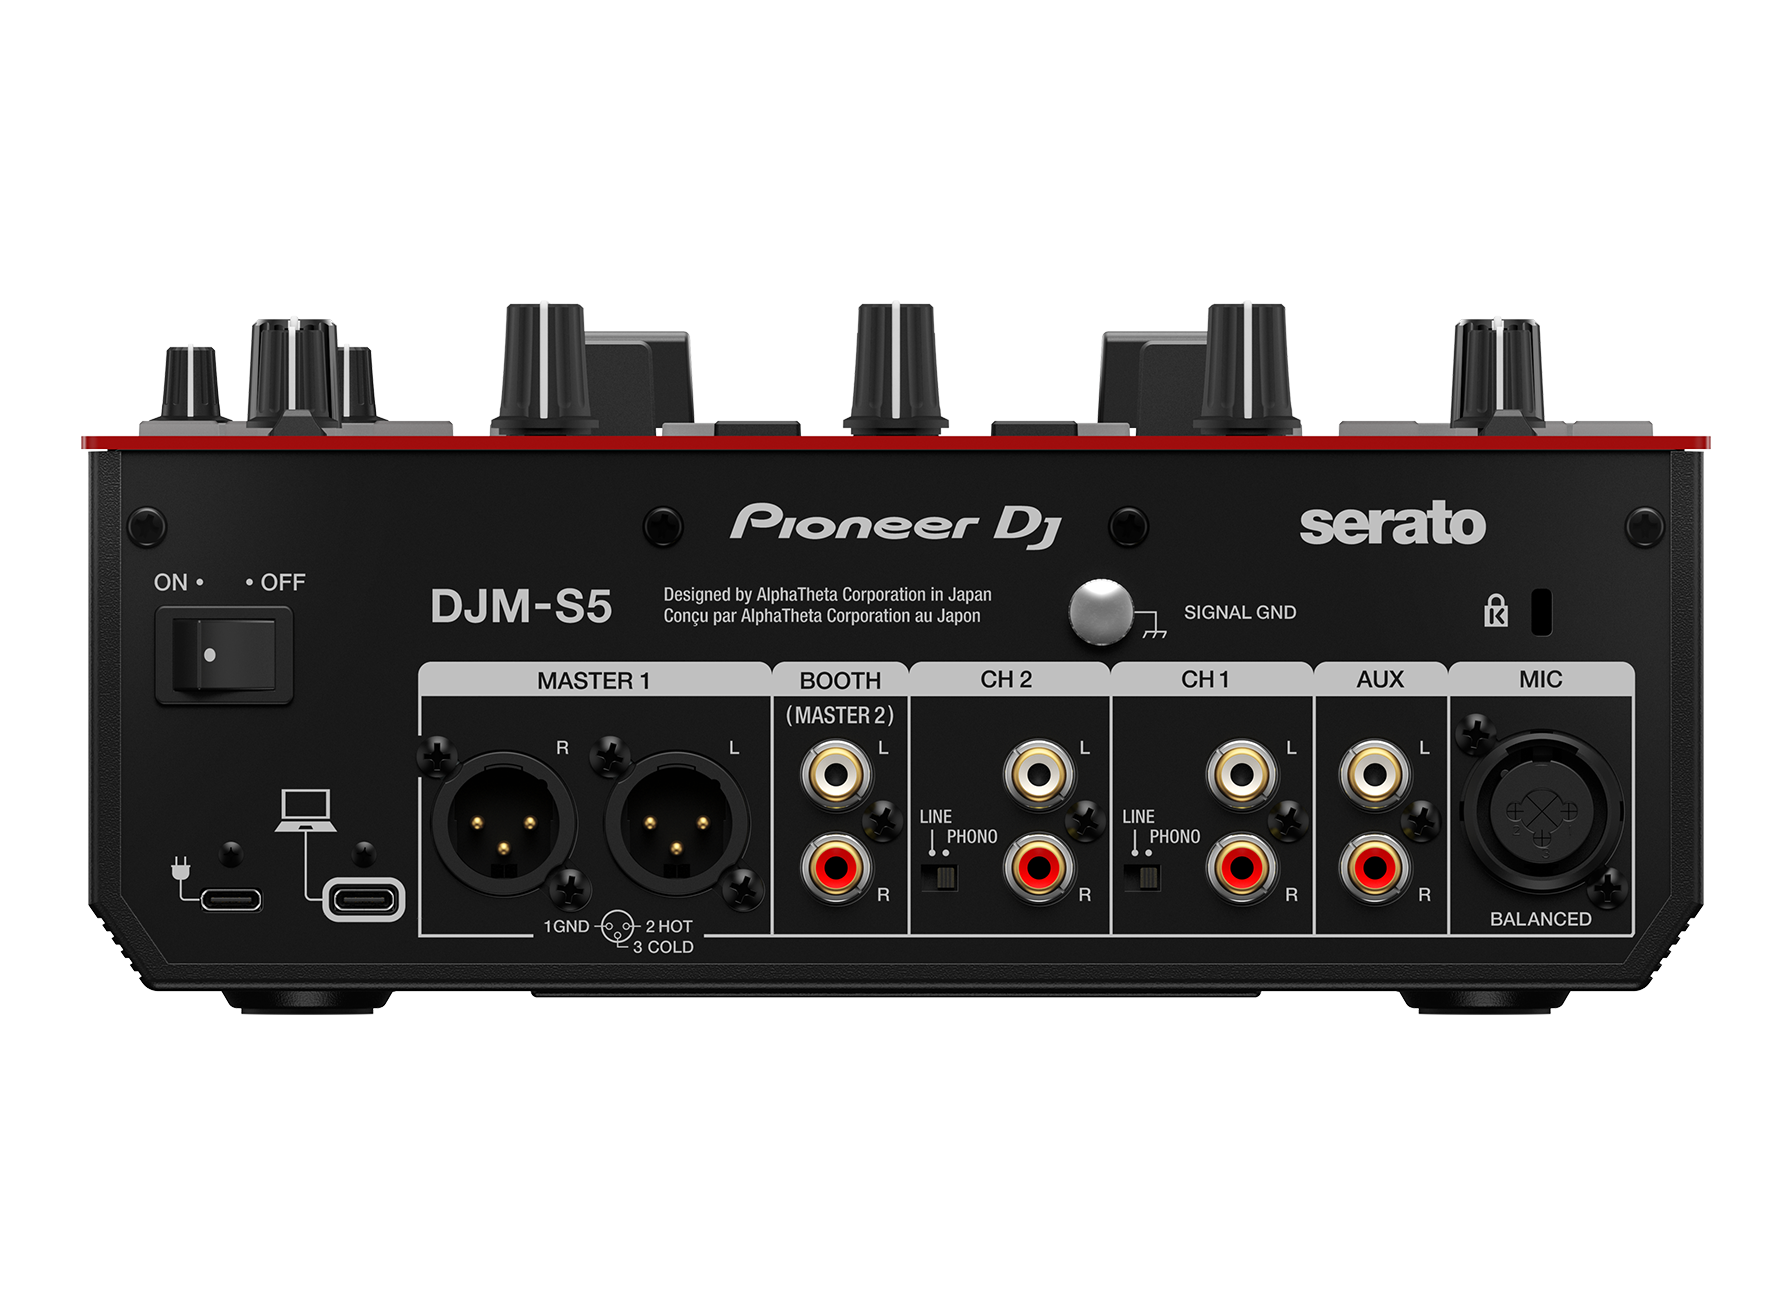 Pioneer Dj DJM-S5